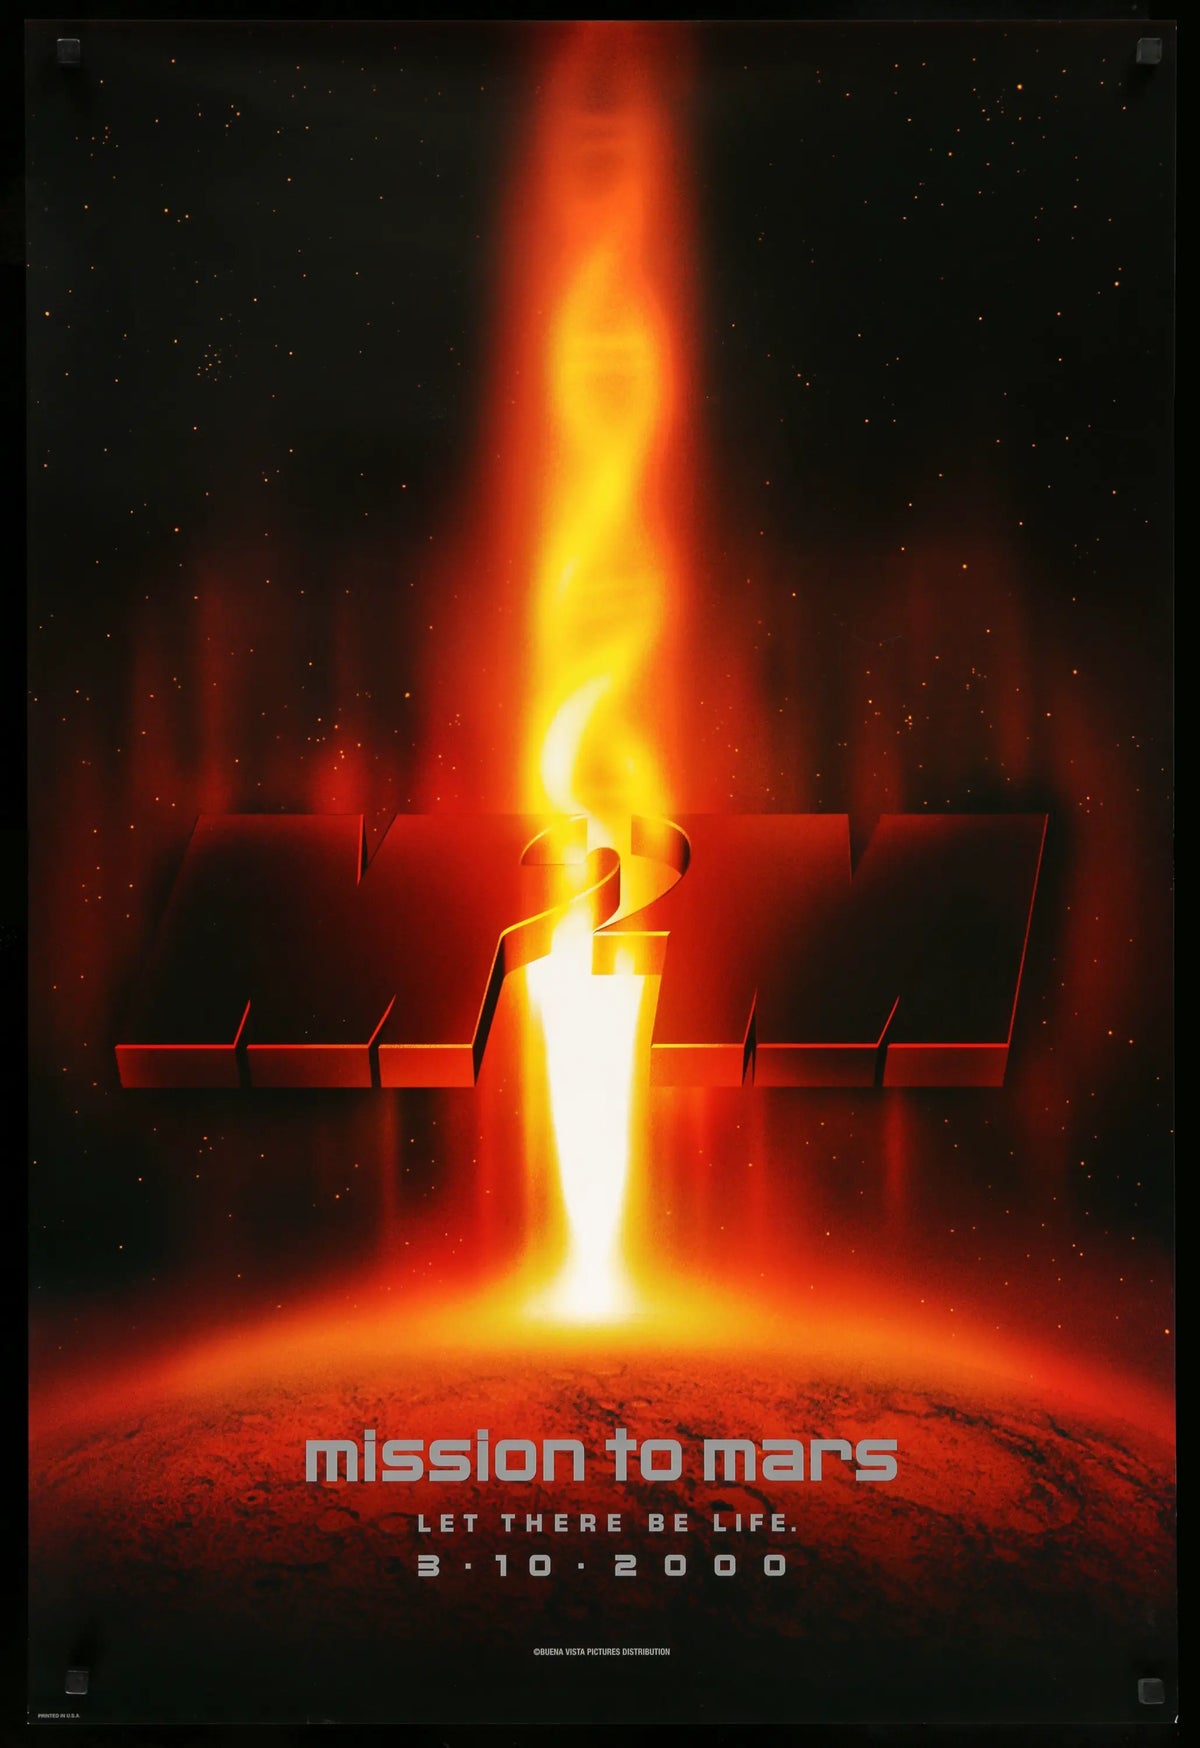 Mission to Mars (2000) original movie poster for sale at Original Film Art